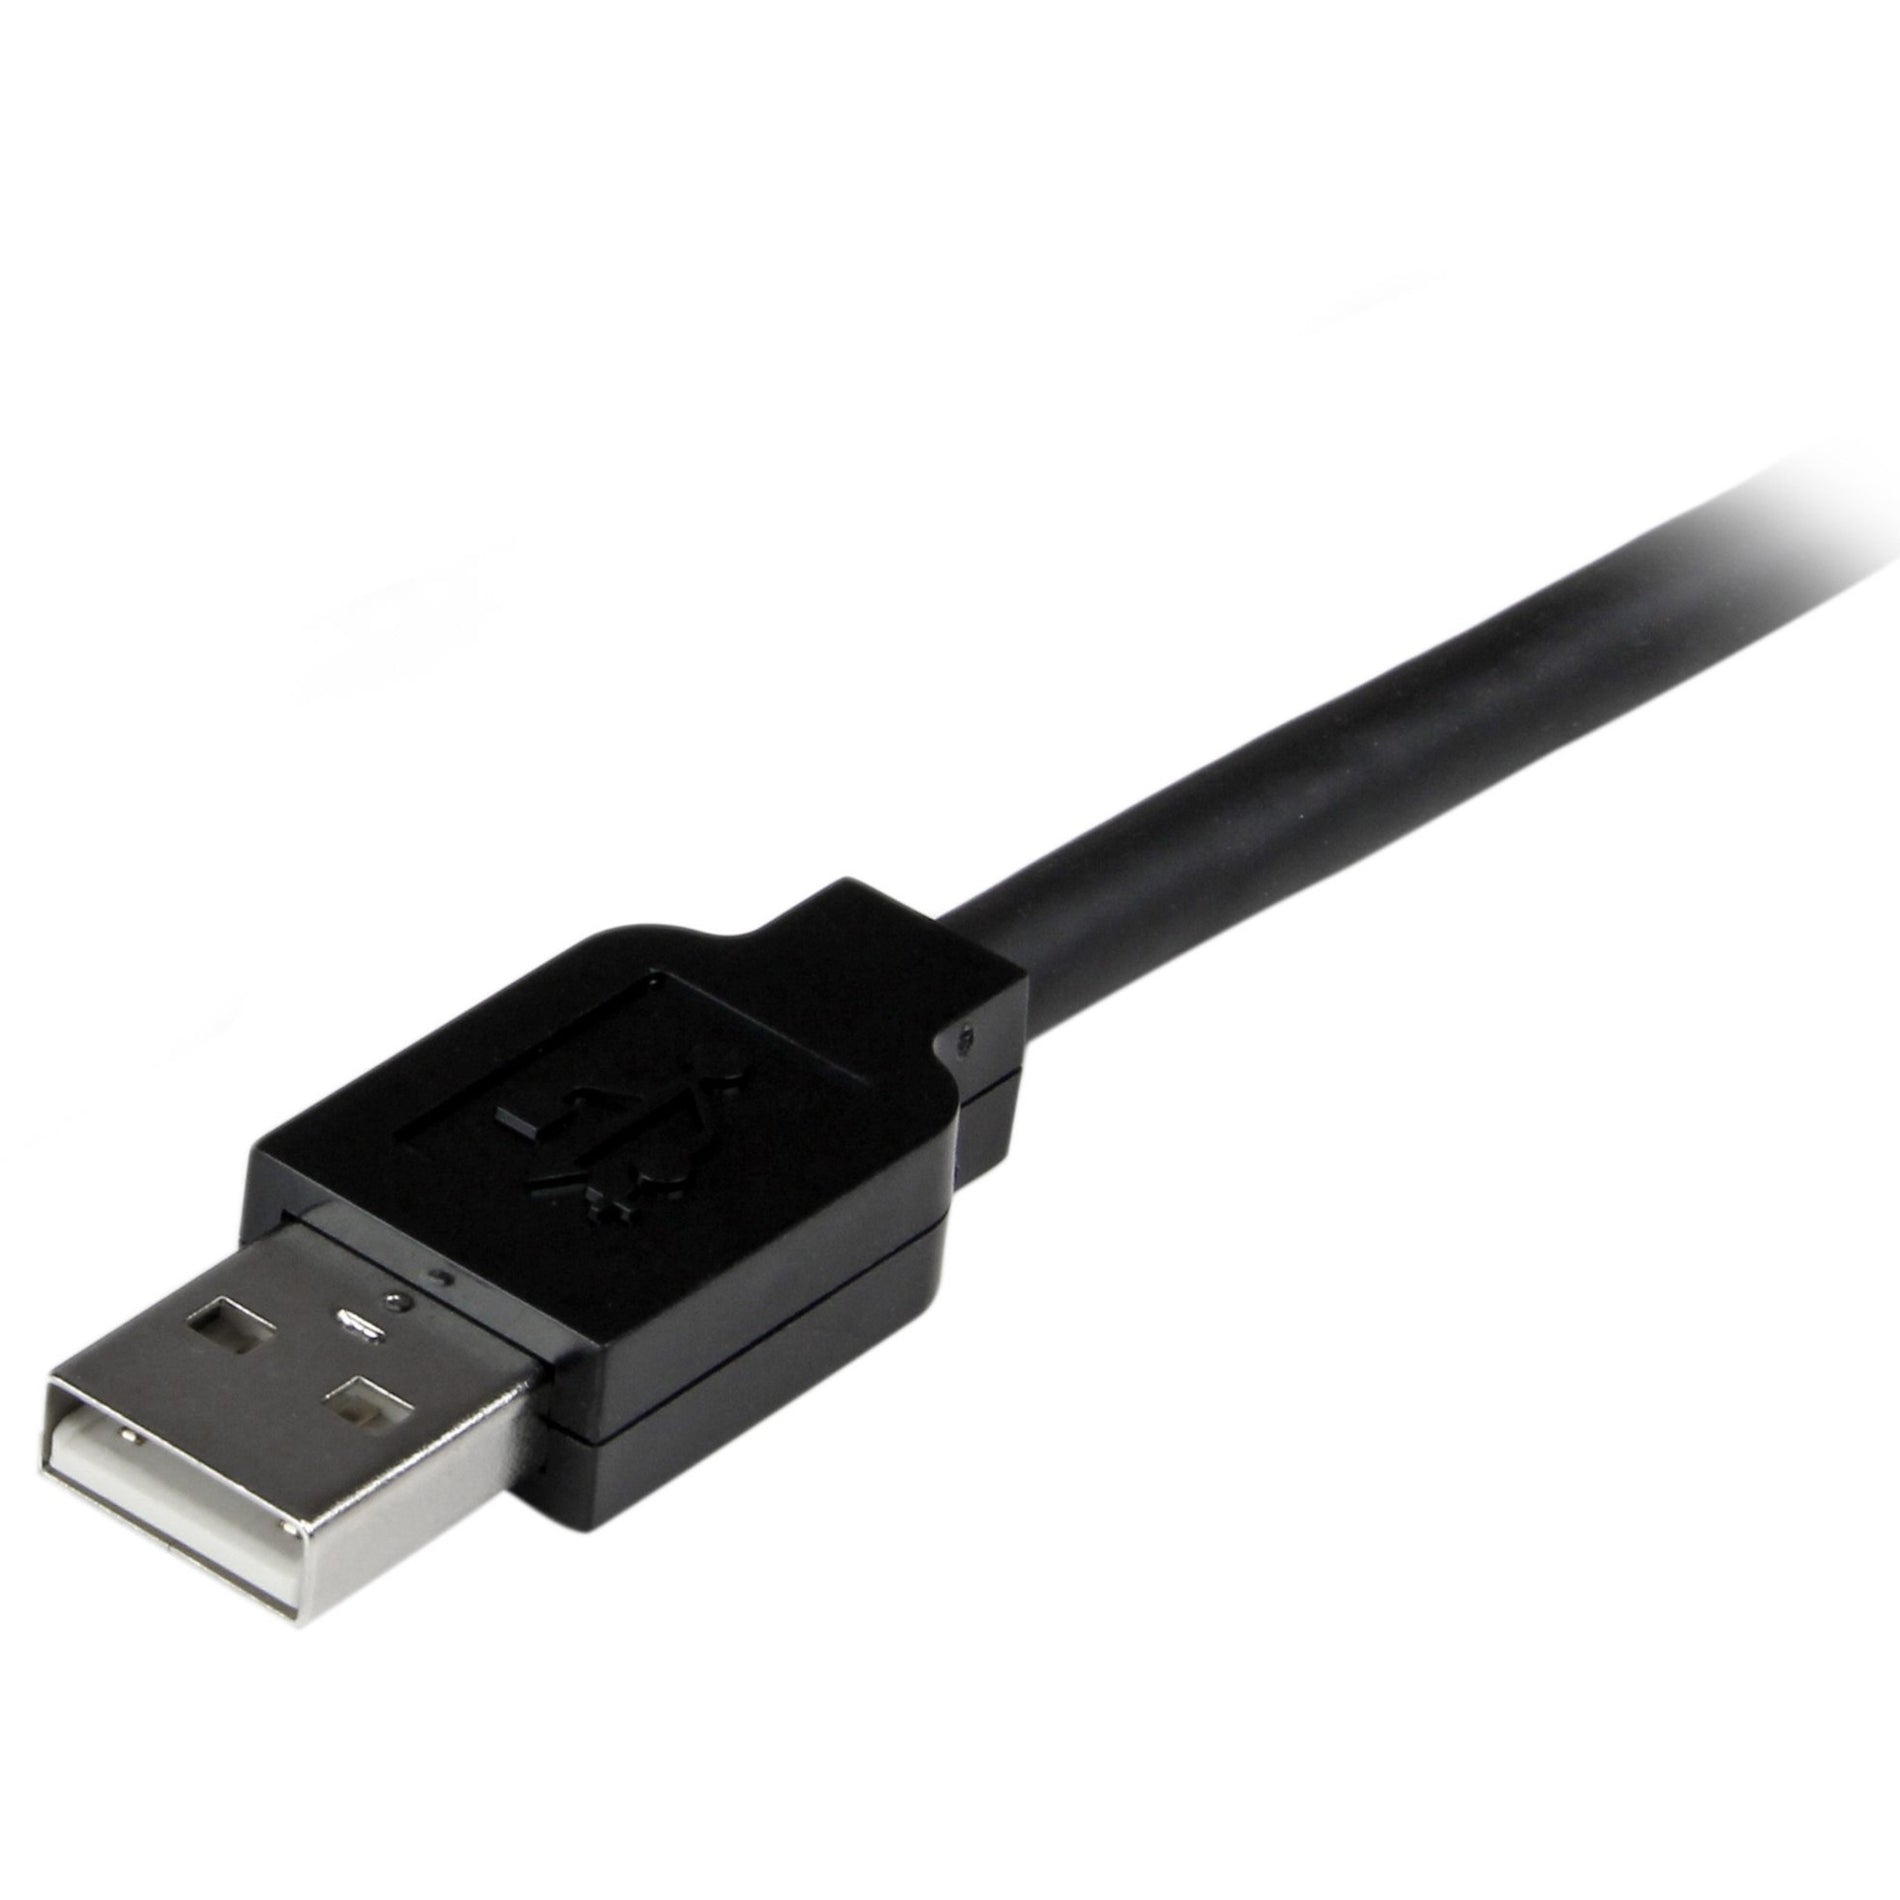 StarTech.com USB2AAEXT35M 35m USB 2.0 Active Extension Cable - M/F, 114.83 ft Data Transfer Cable, 480 Mbit/s, Black